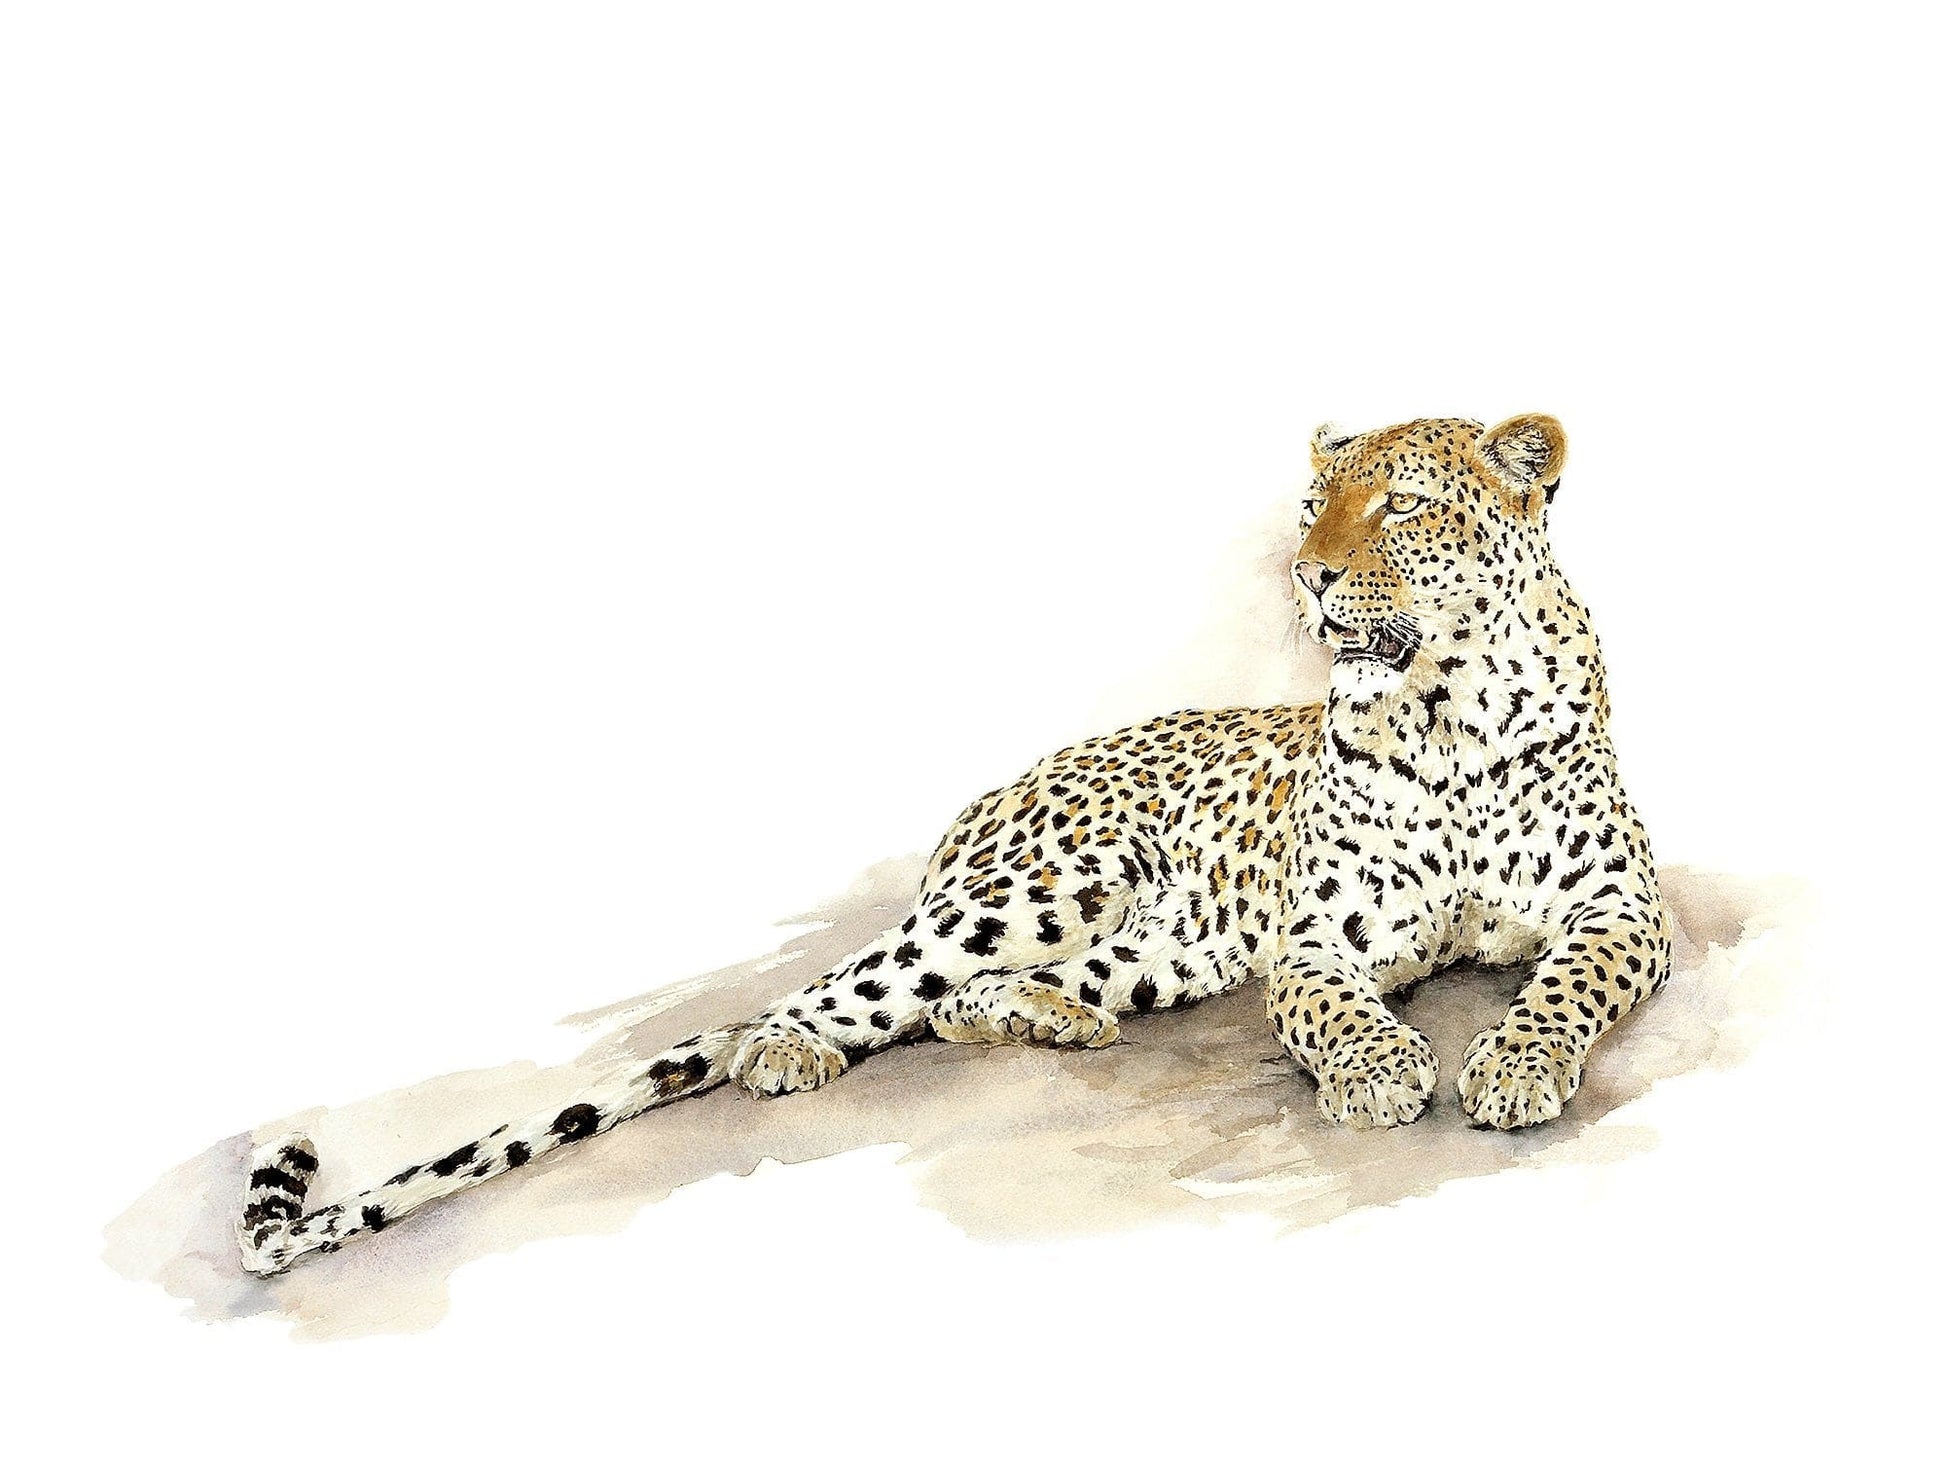 Adult Leopard art prints by Sue Dickinson wildlife artist, entitled Cat on a Warm Rock.